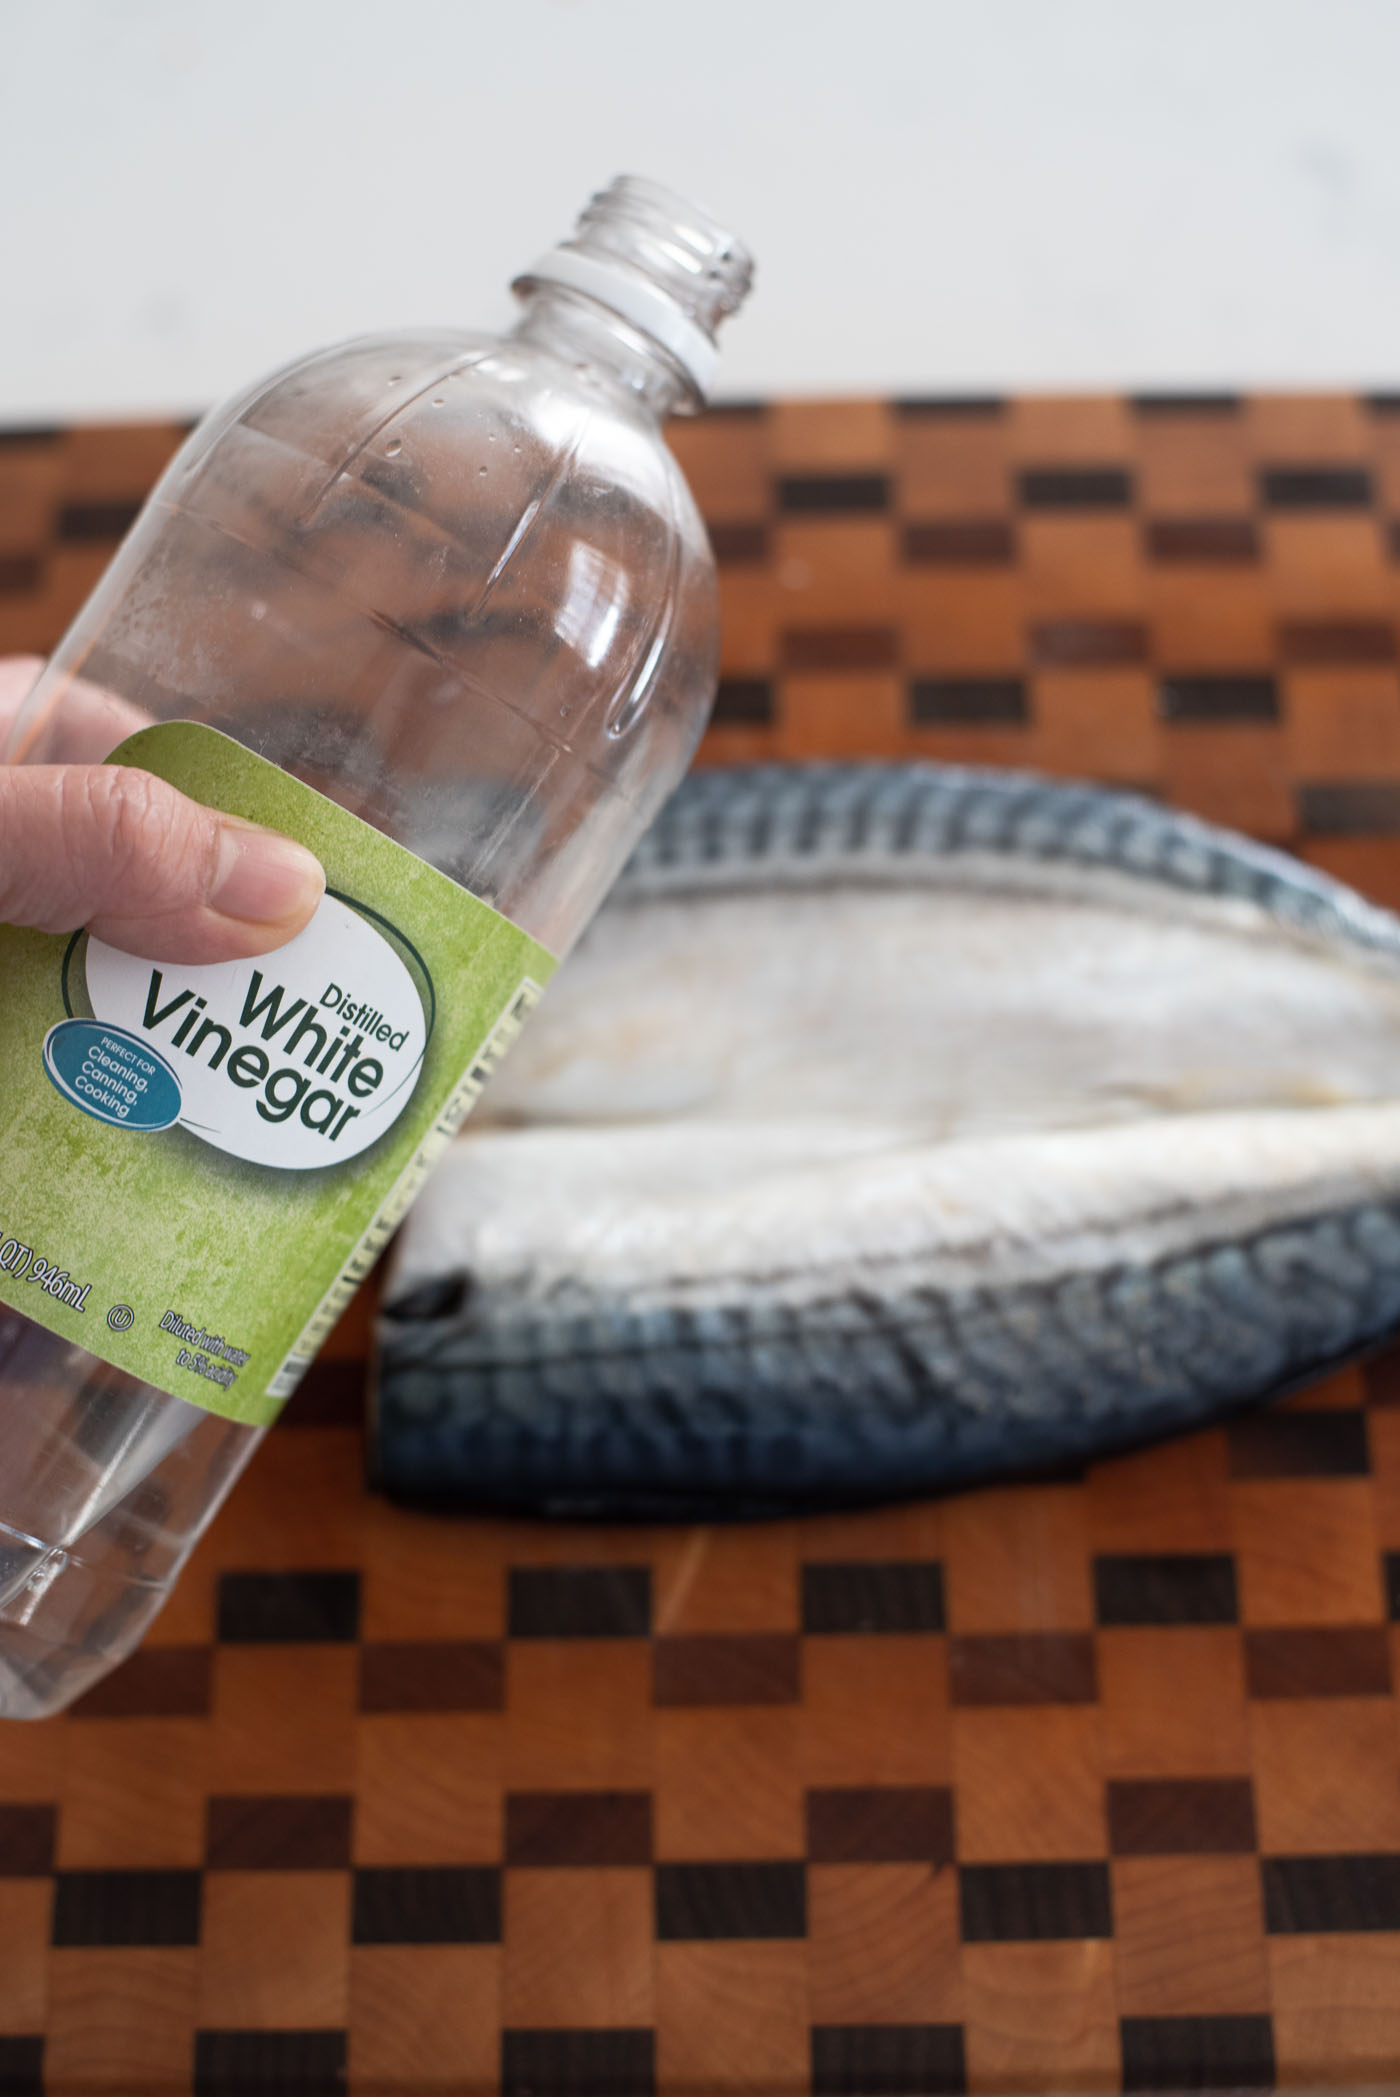 White vinegar is used to coat mackerel fish